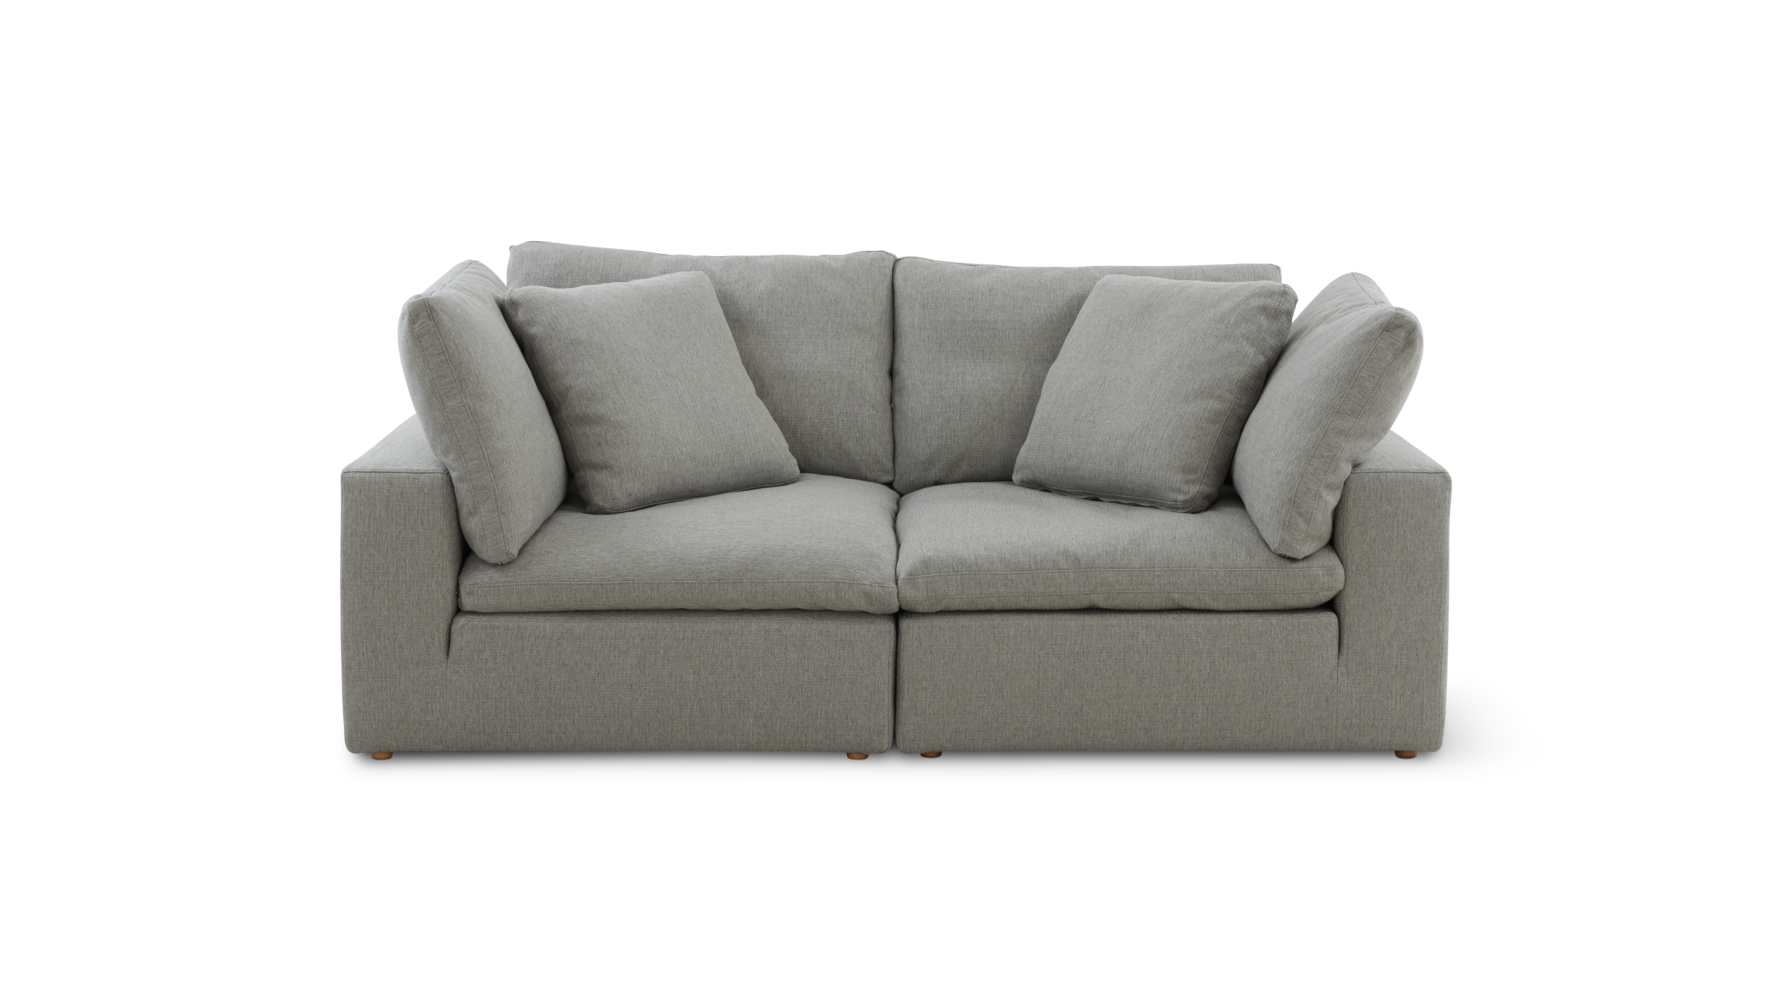 Movie Night™ 2 Piece Modular Sofa, Standard, Mist - Image 1